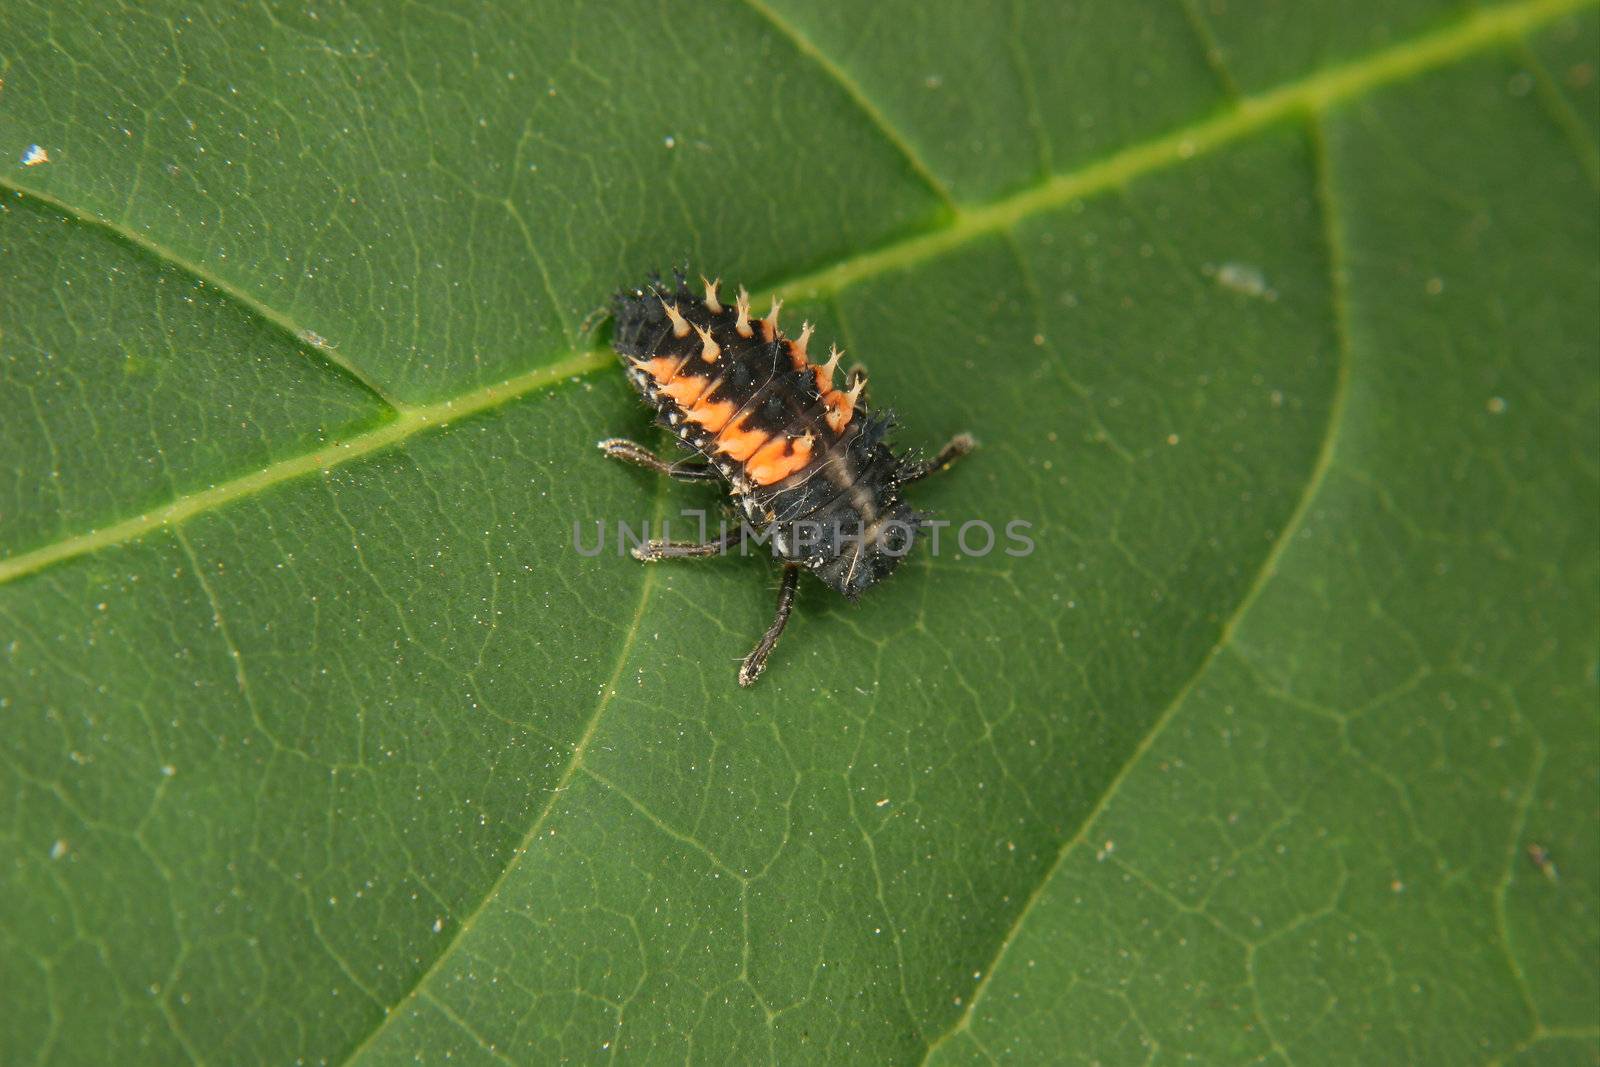 Ladybird beetle larva (Coccinella) on a plant